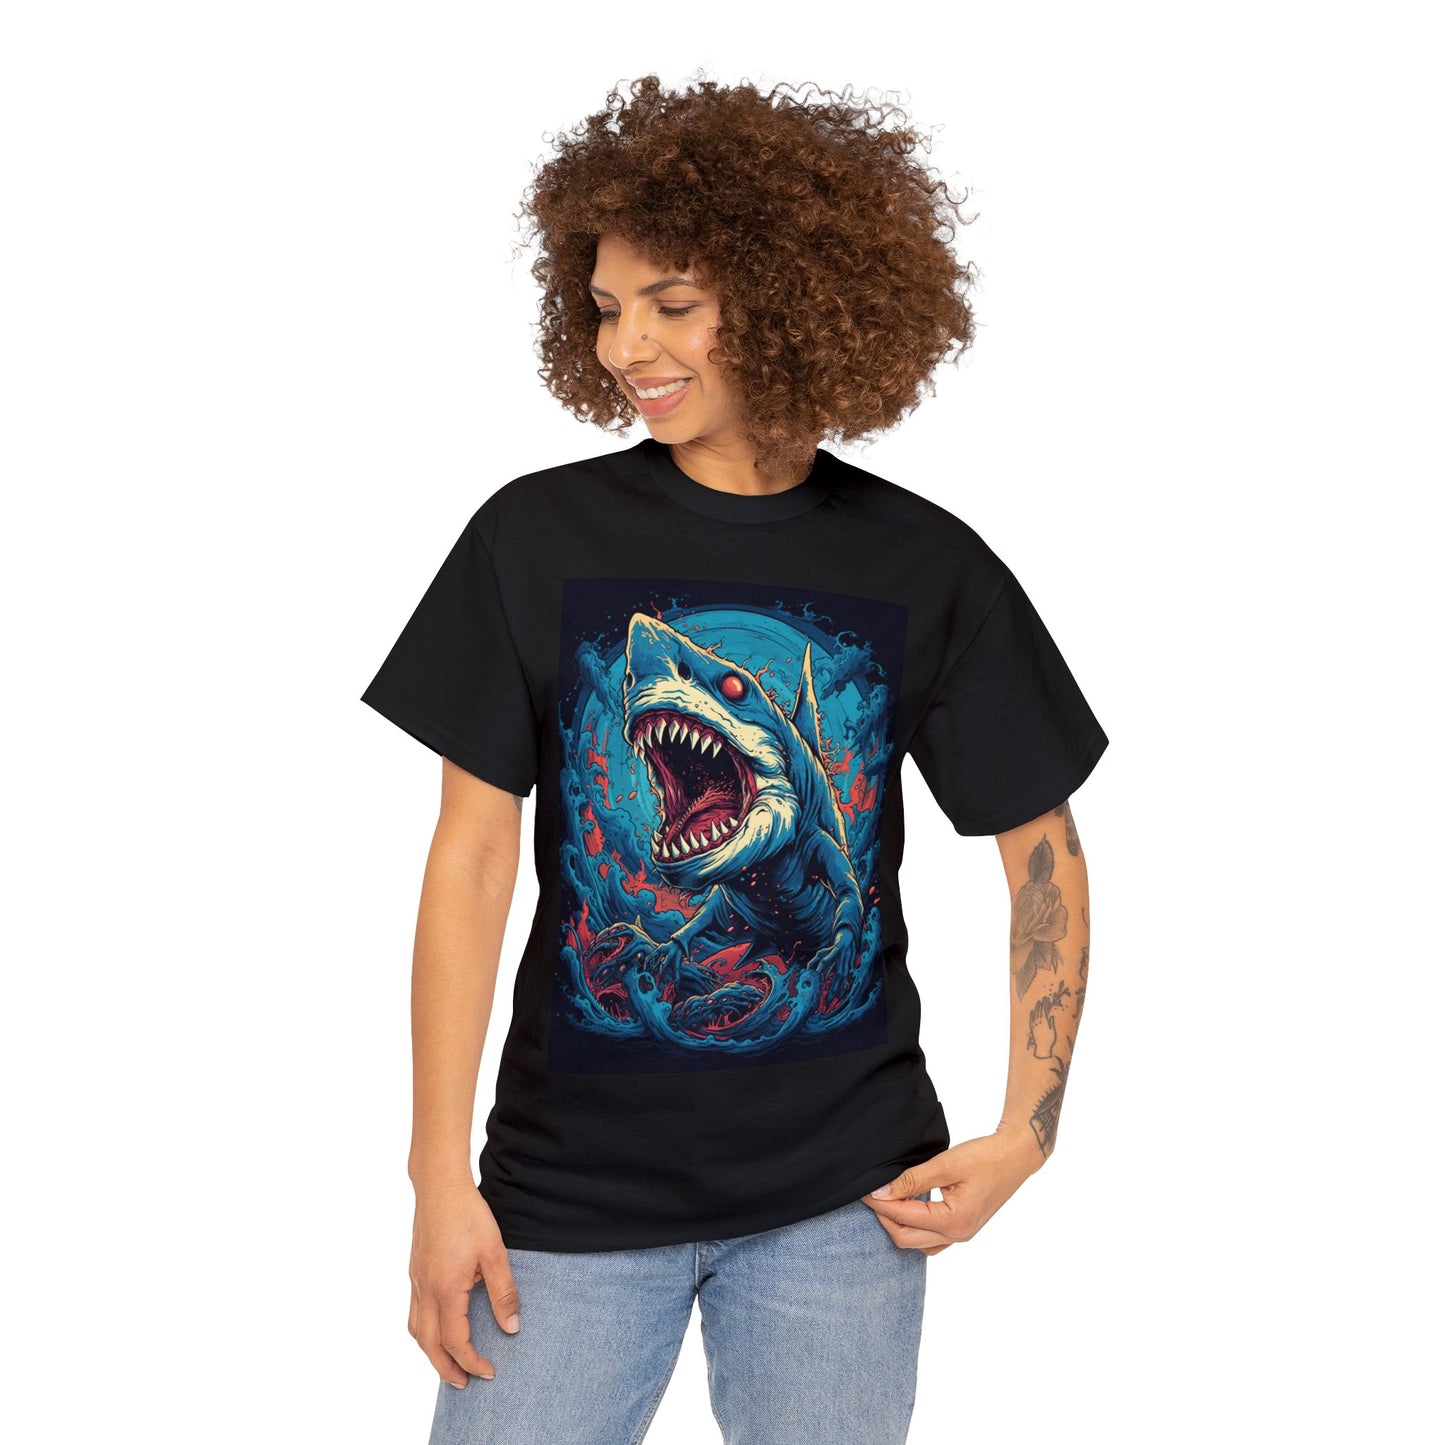 Mutant Shark Graphic Design Tee